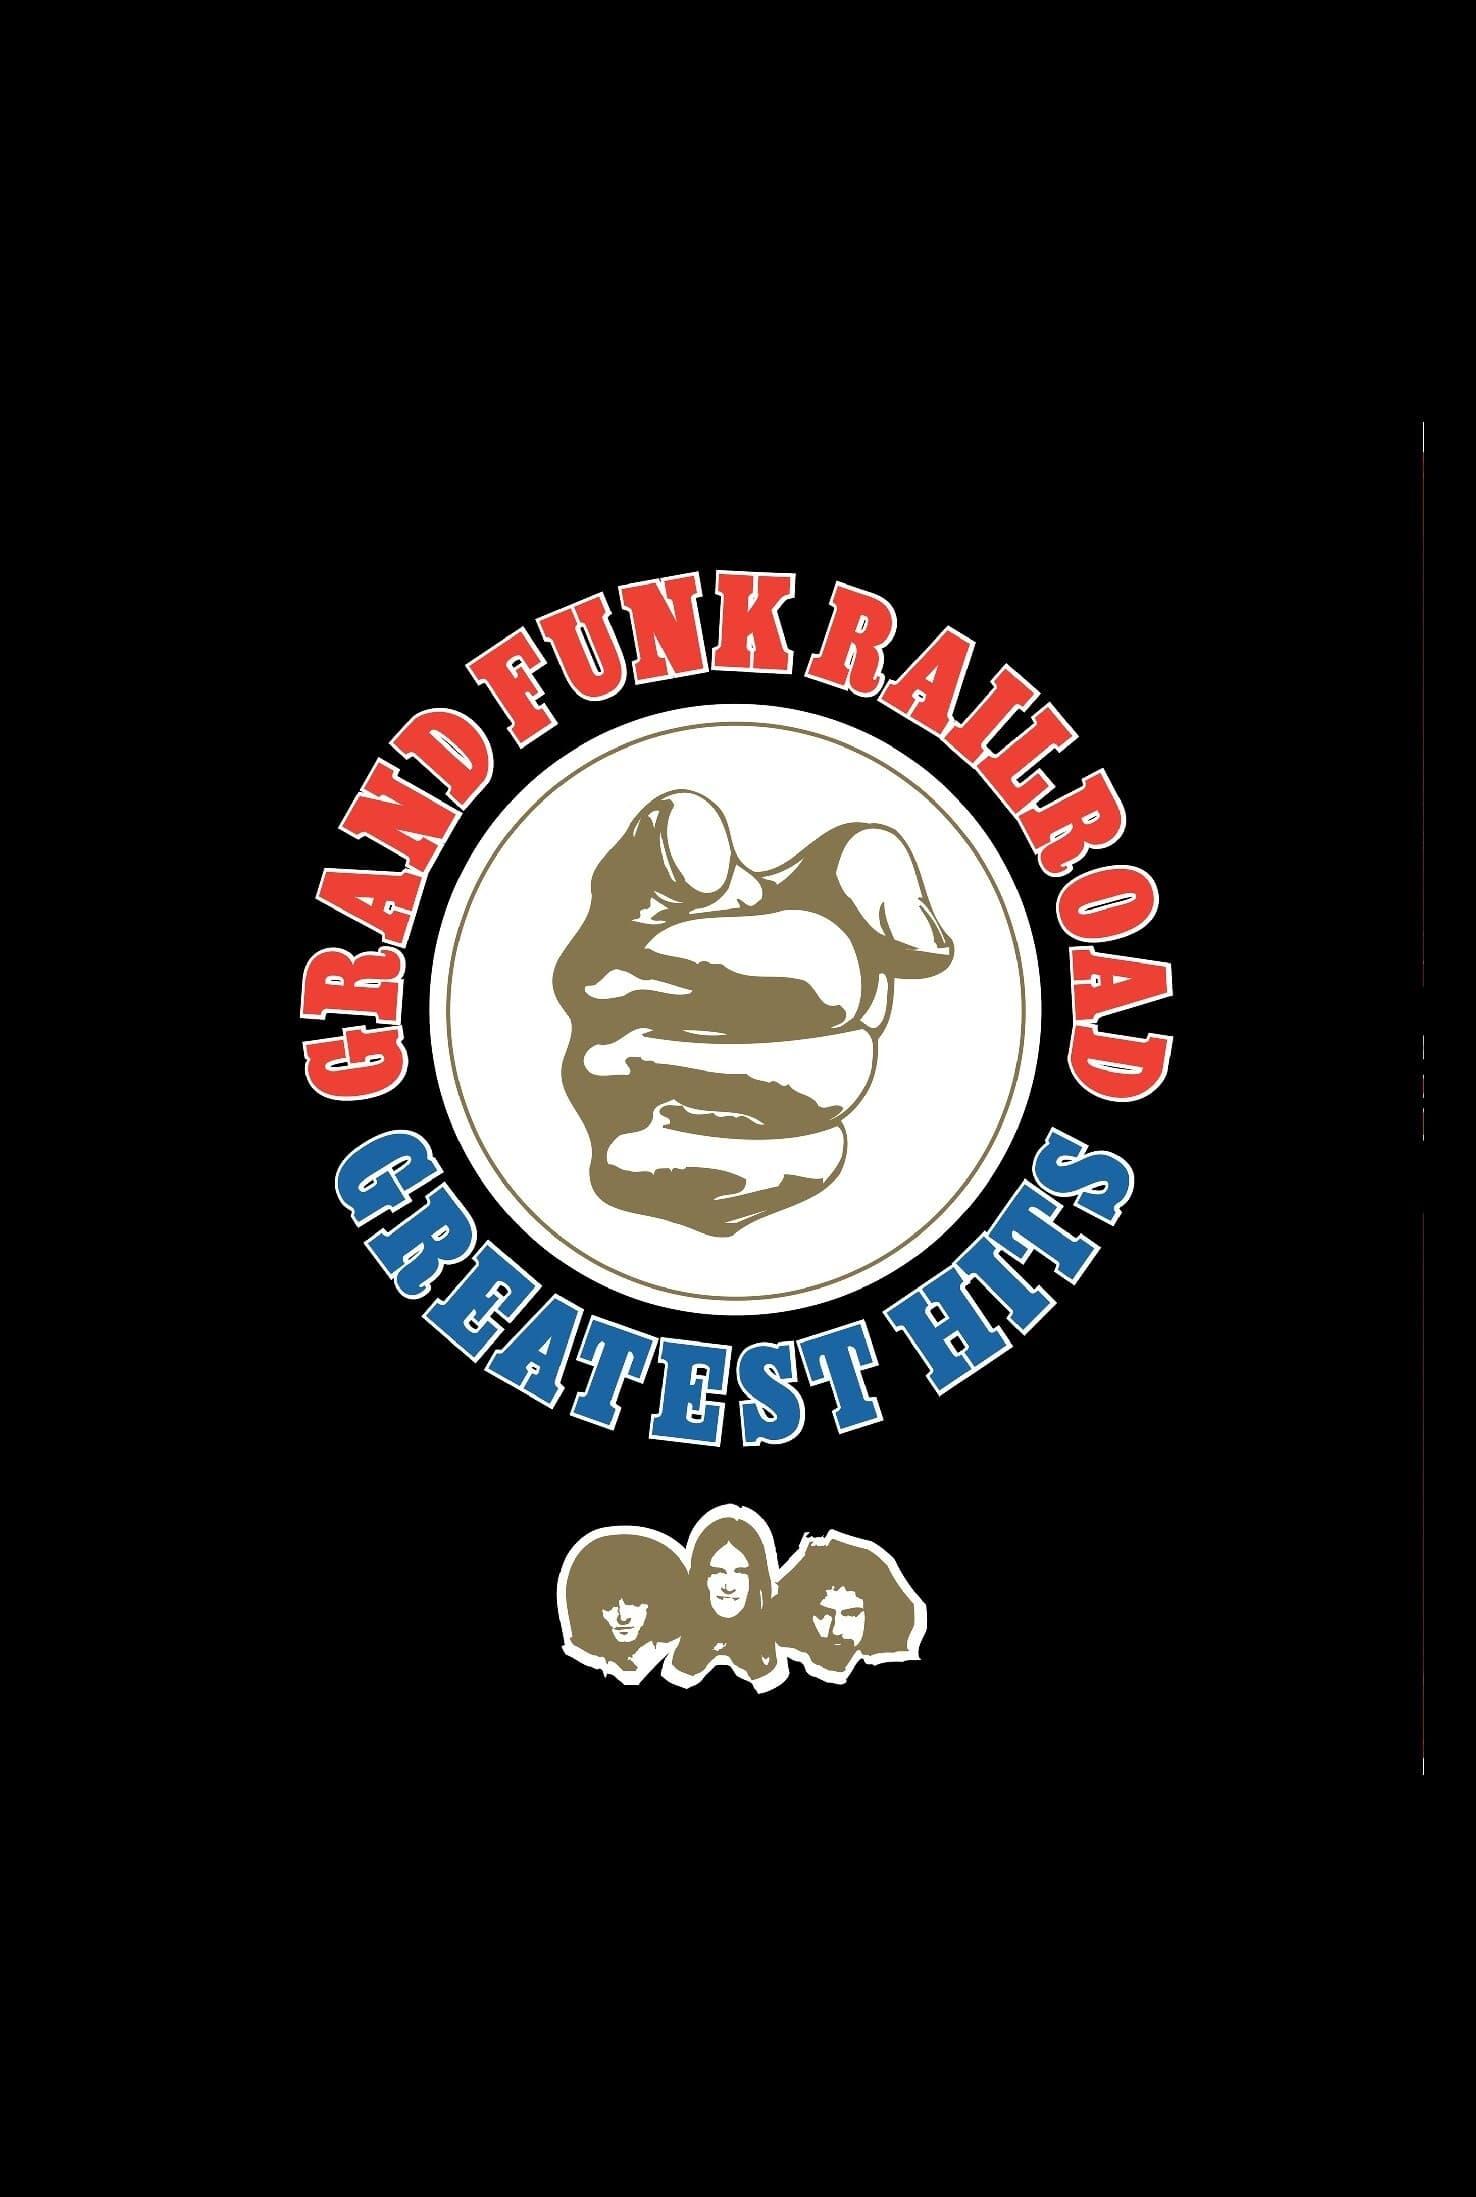 Grand Funk Railroad: Greatest Hits poster